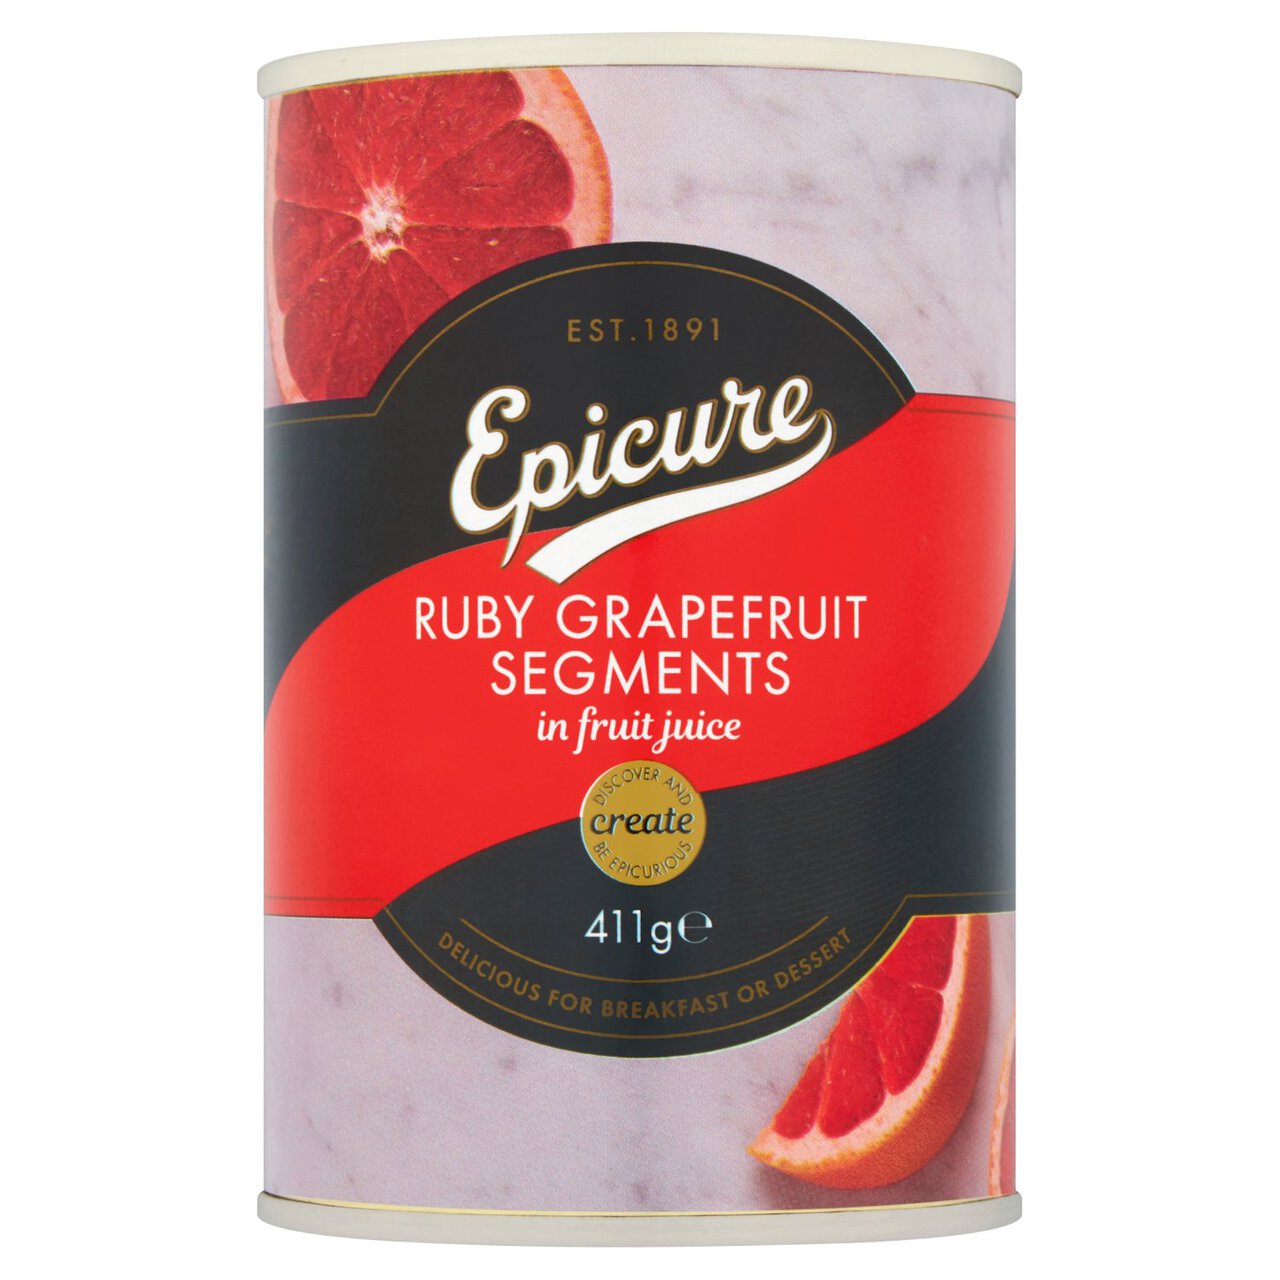 Epicure Ruby Grapefruit Segments in Juice 411g